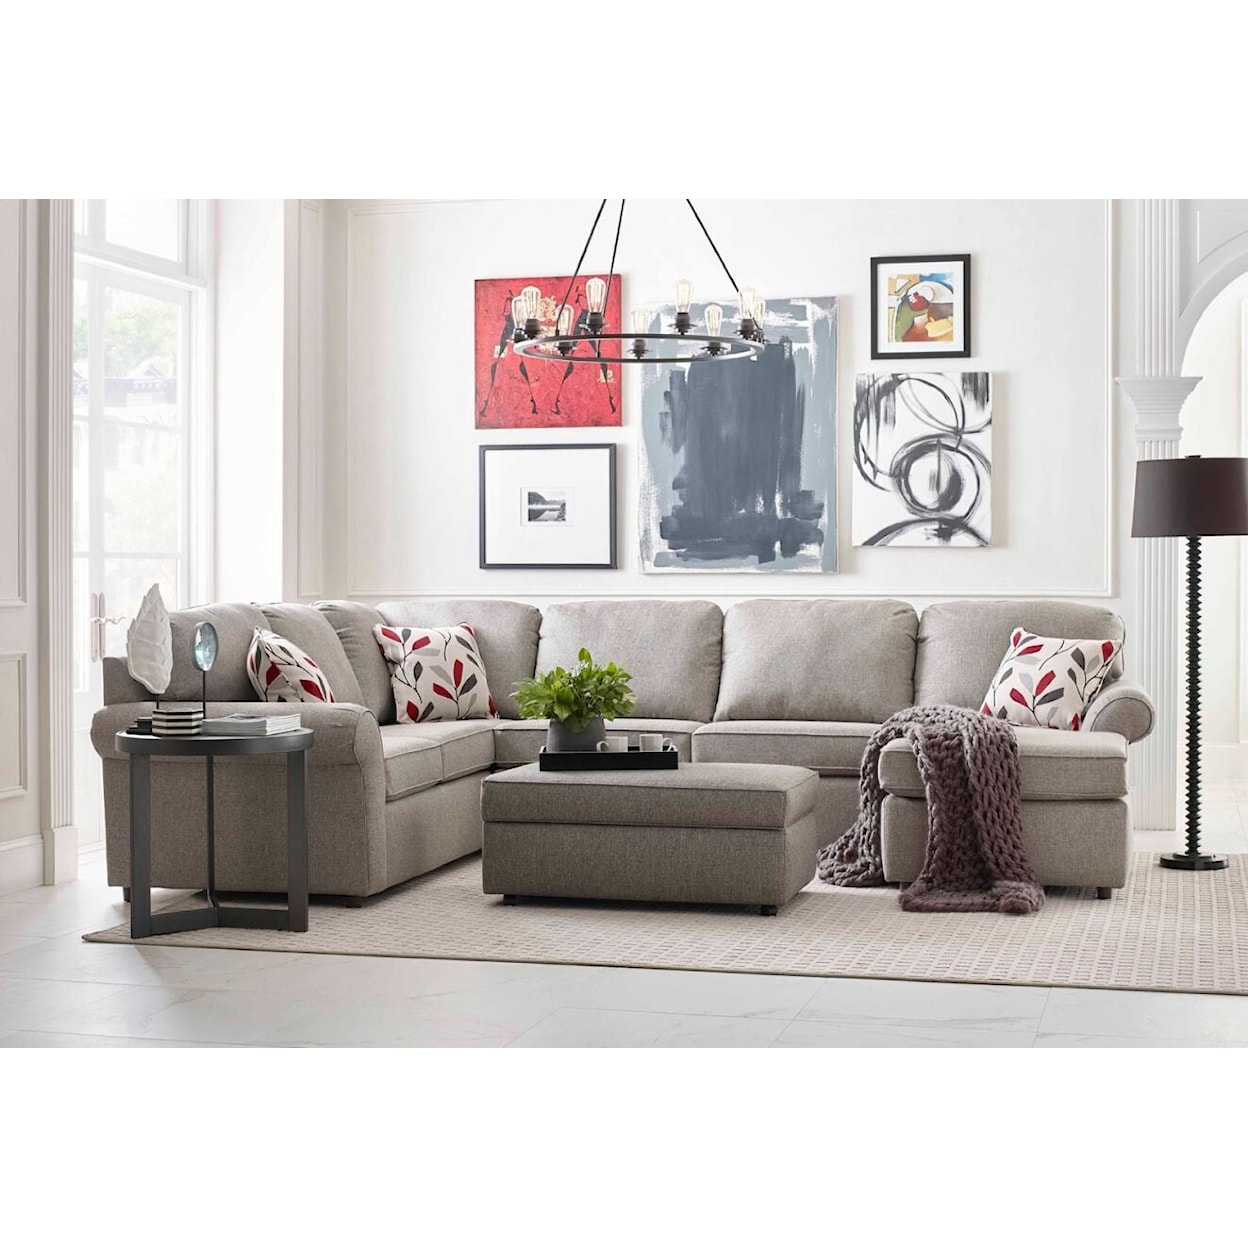 Dimensions 2400/X Series - Malibu 4-Piece Sectional Sofa